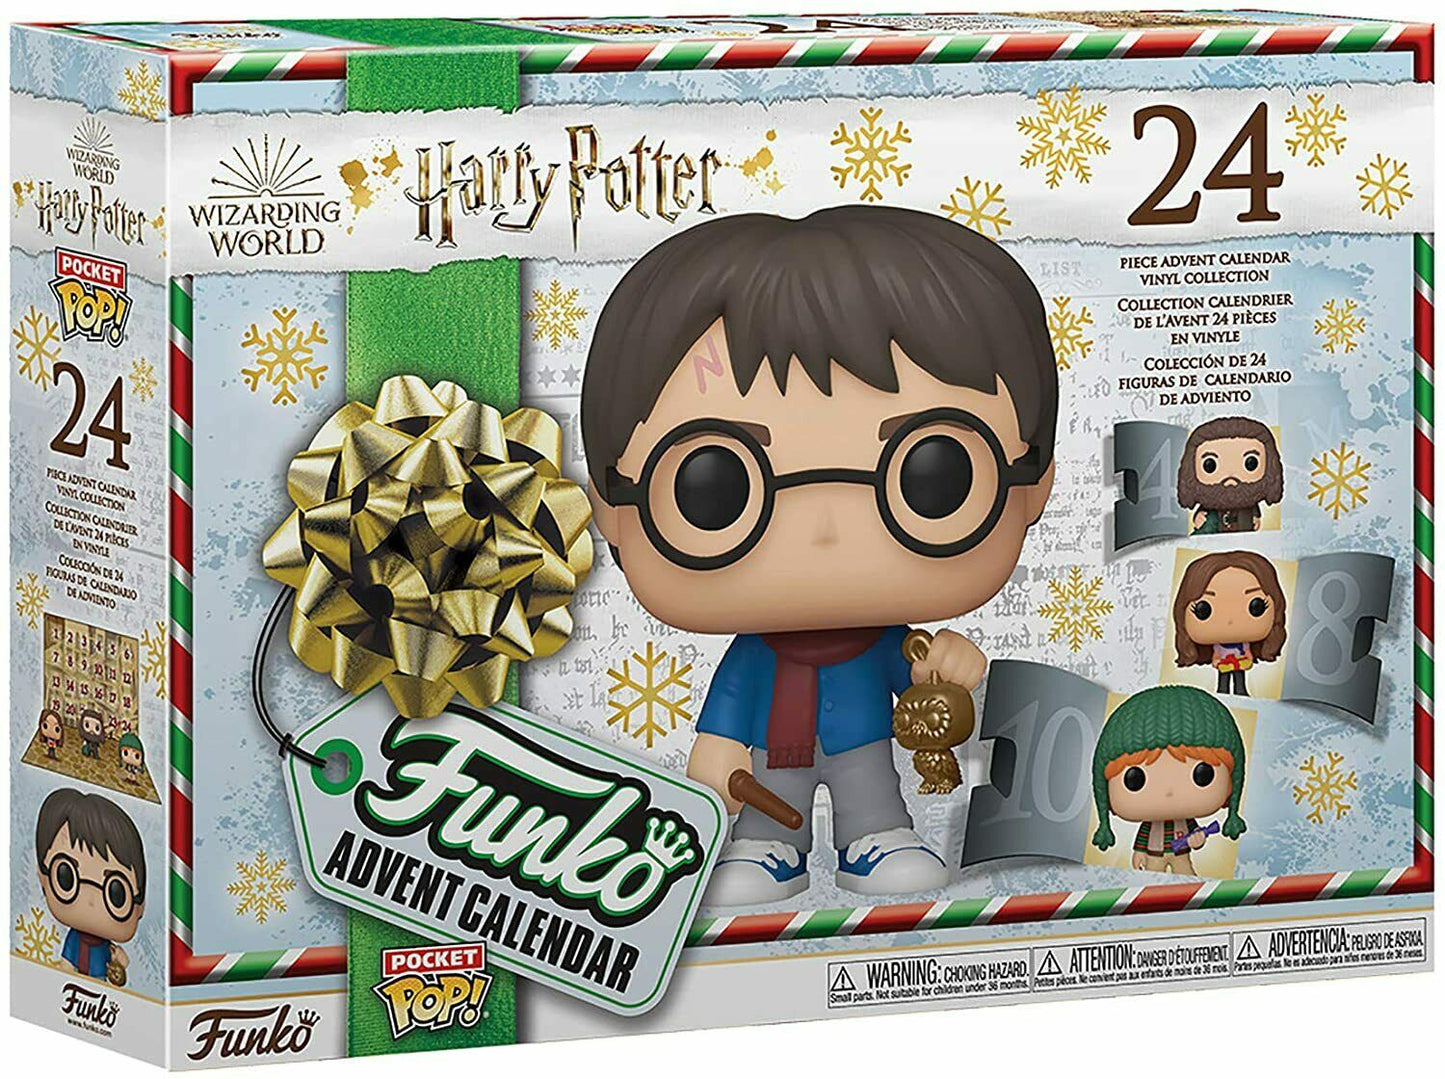 Pocket Pop Harry Potter 2020 Advent Calendar